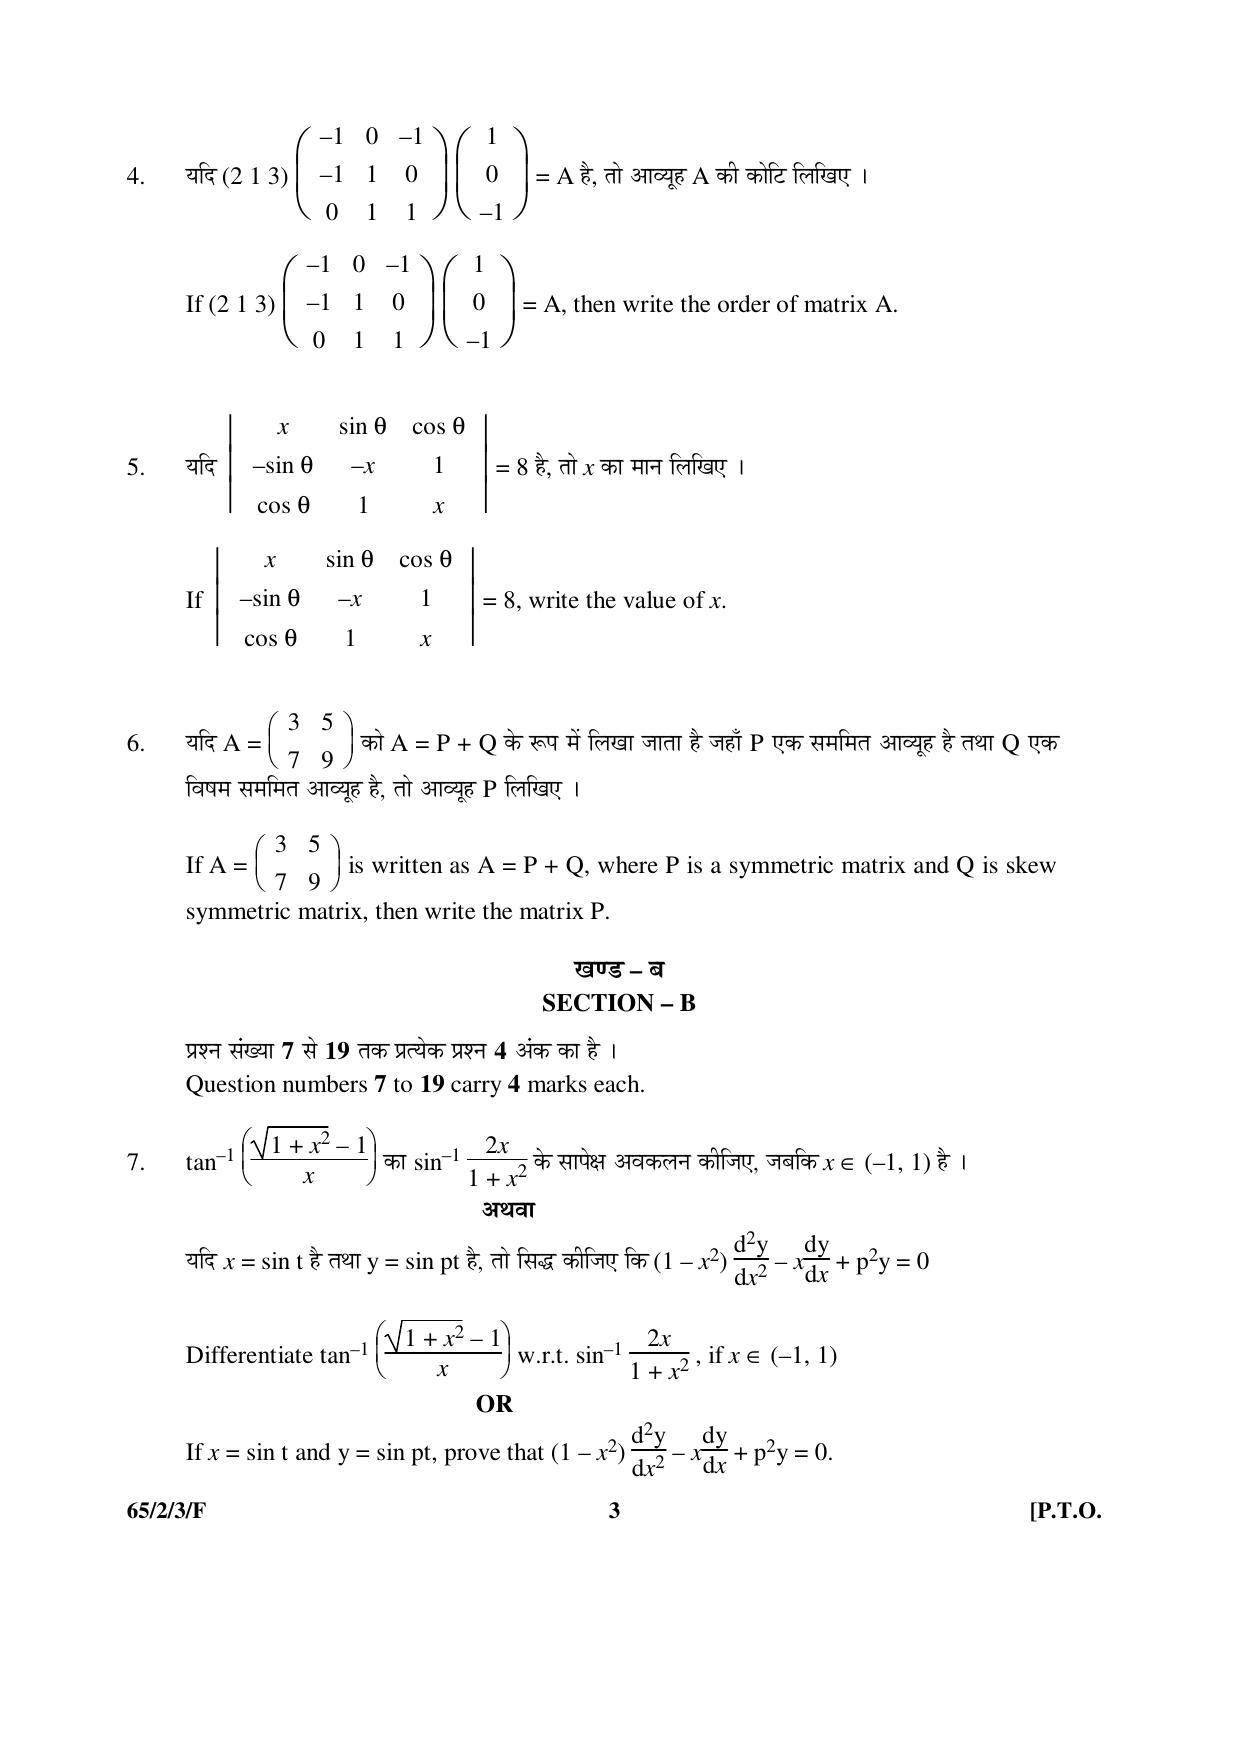 CBSE Class 12 65-2-3-F _Mathematics_ 2016 Question Paper - Page 3